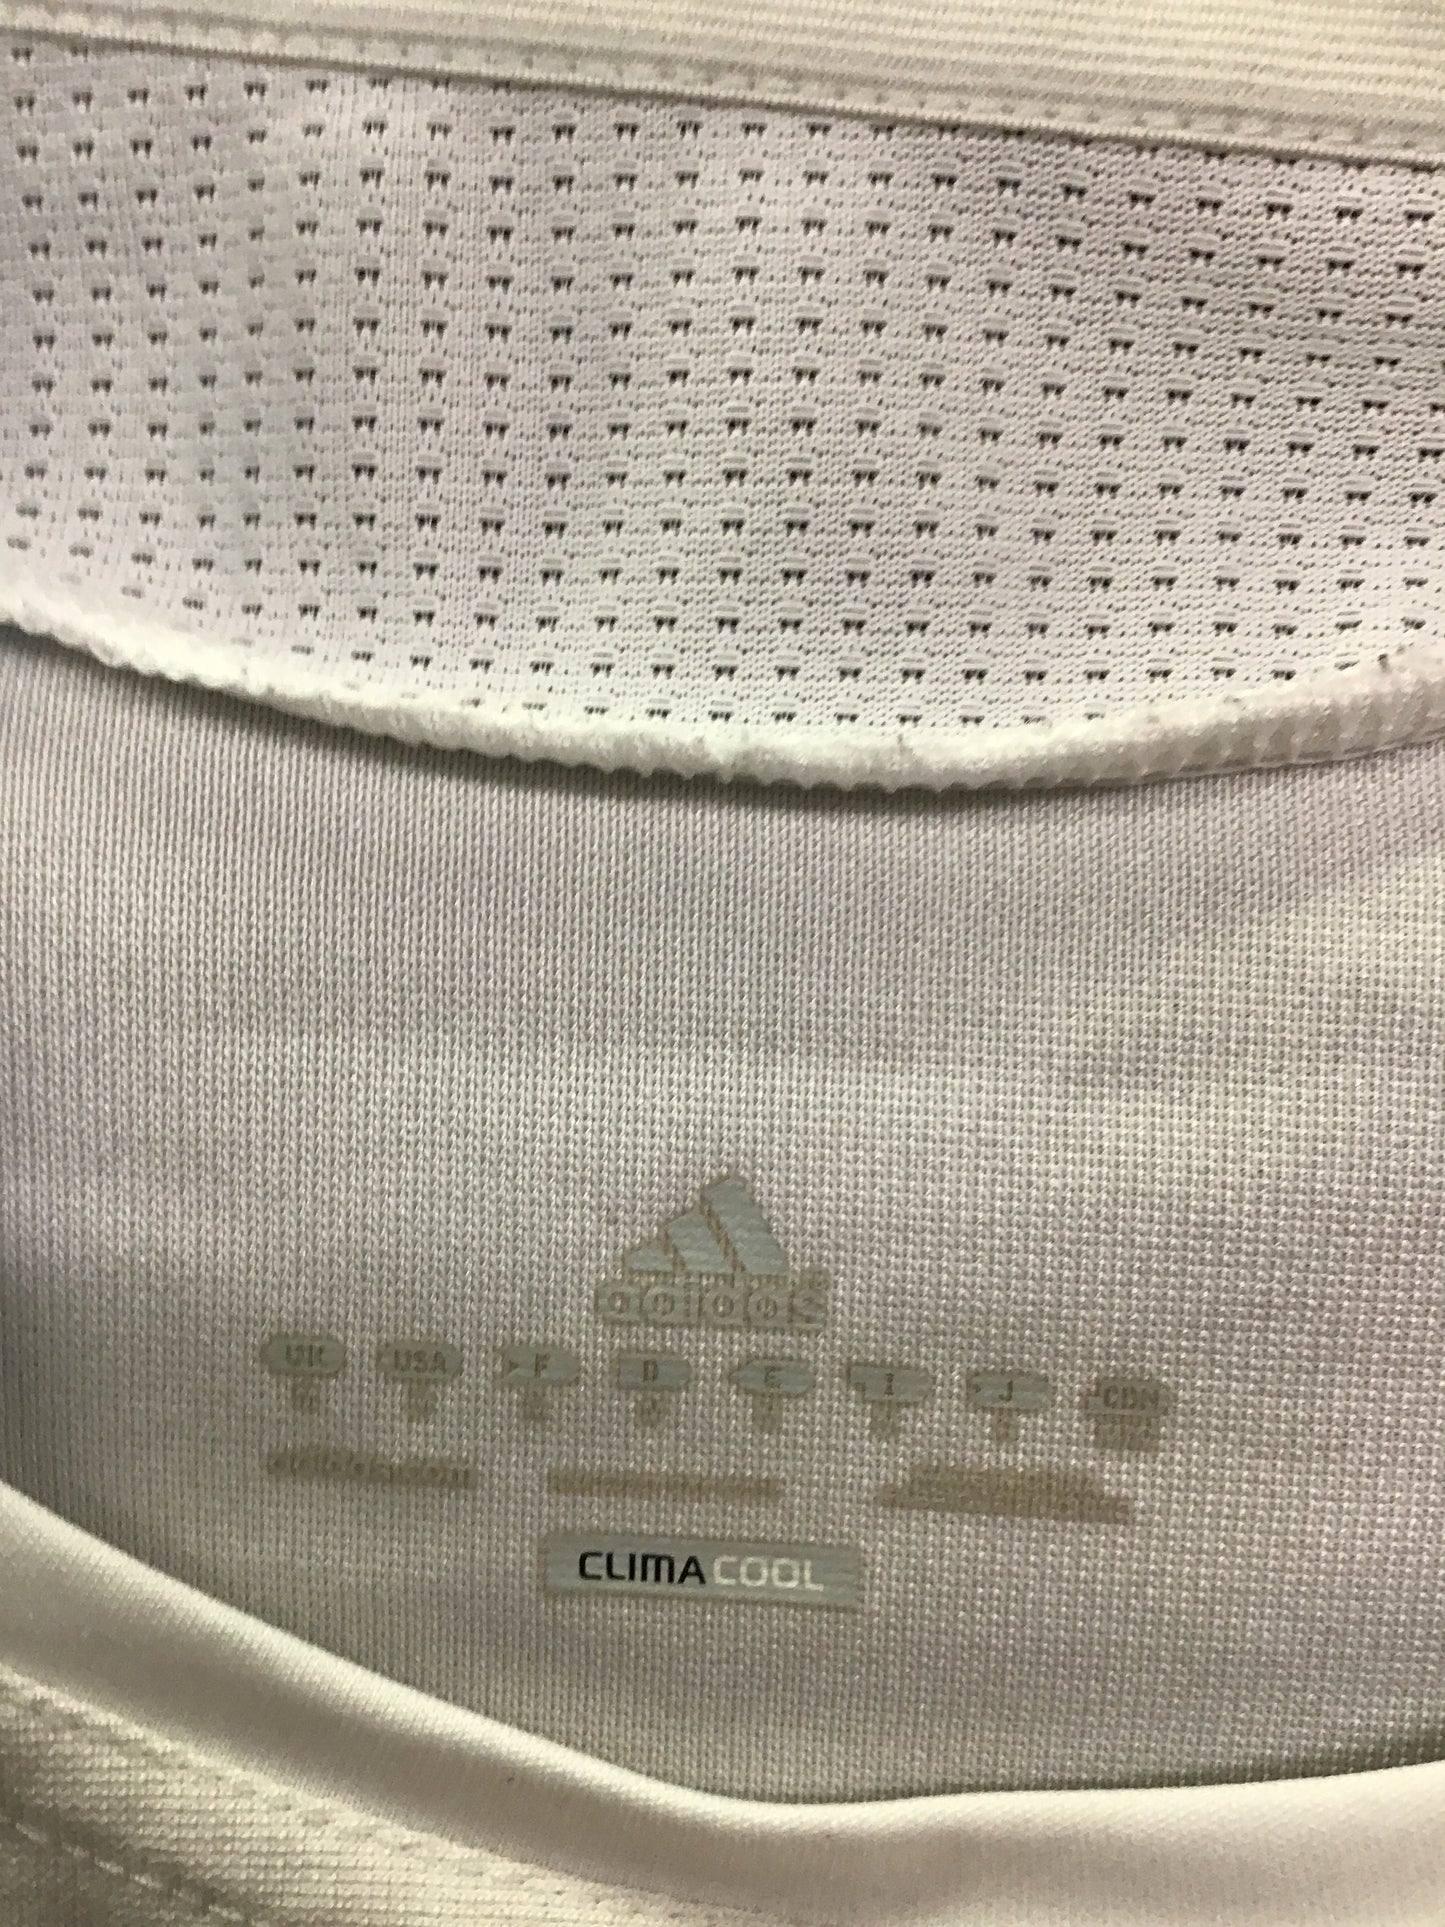 Adidas Droit Au But Long Sleeve Jersey, Size S